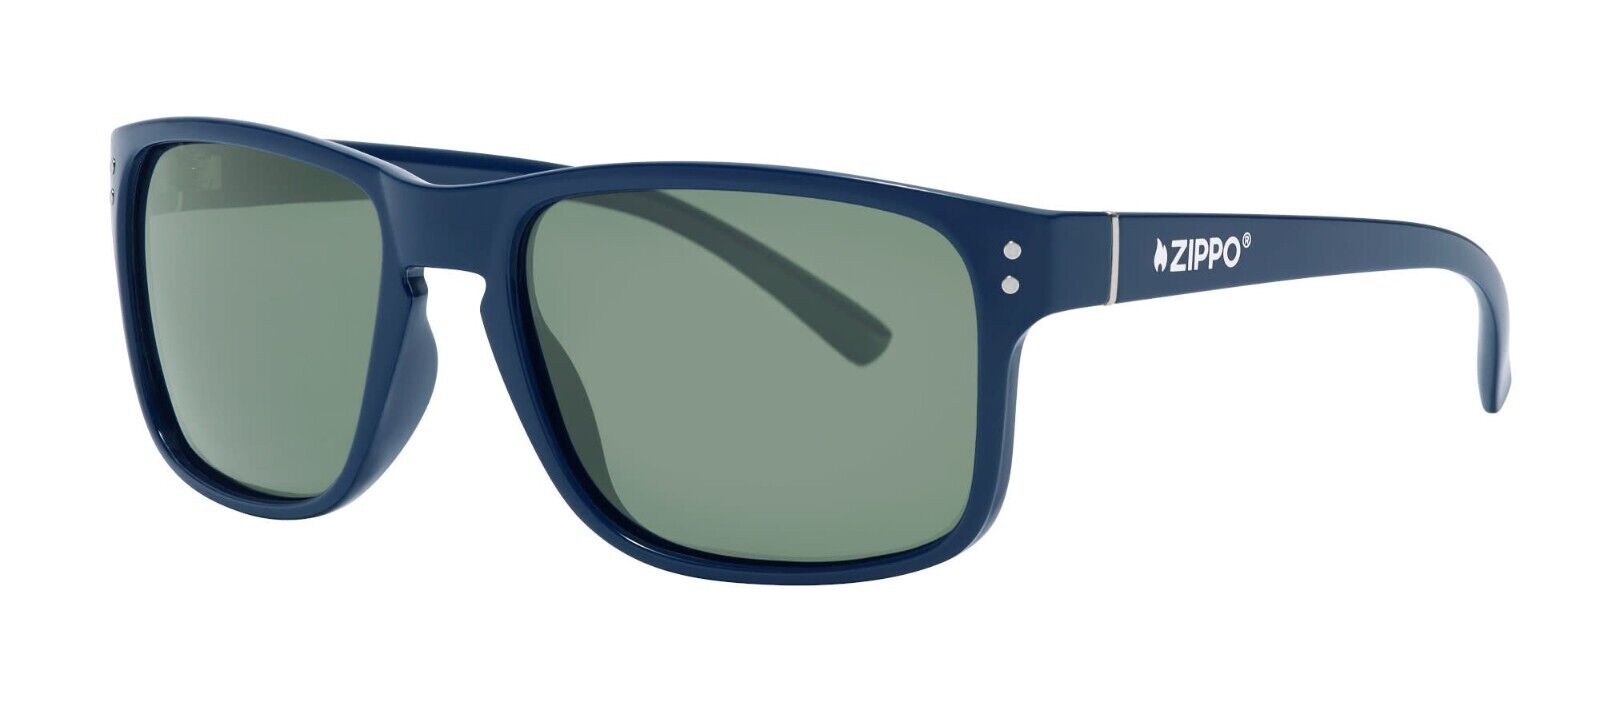 Zippo Polarized Square Sunglasses, OB78-03U